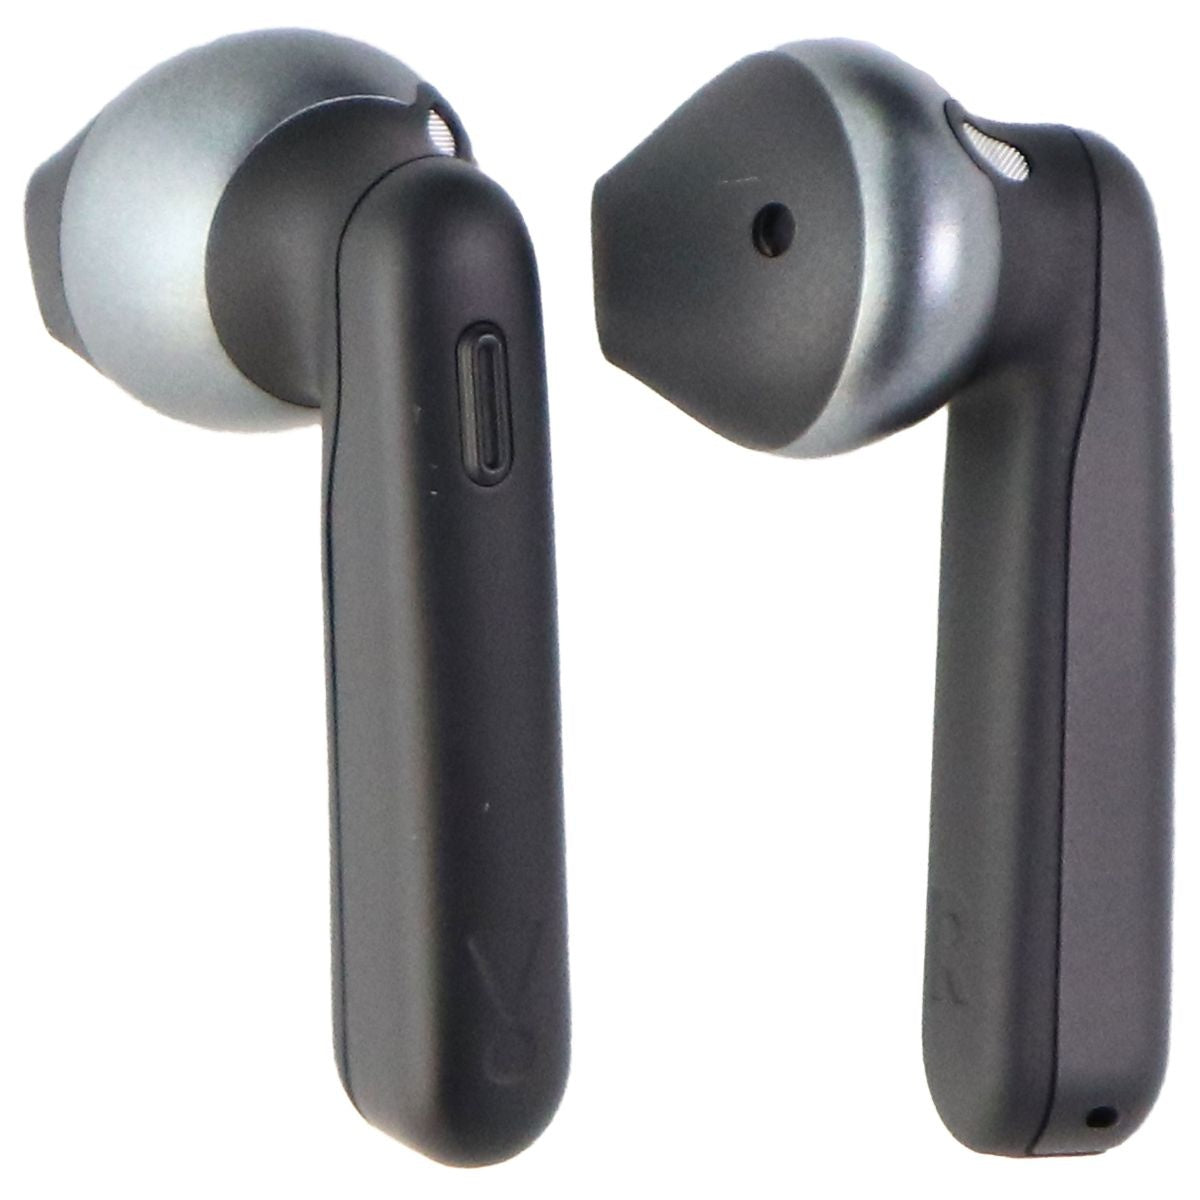 JBL Tune 225TWS True Wireless Bluetooth Earbud Headphones - Black Portable Audio - Headphones JBL    - Simple Cell Bulk Wholesale Pricing - USA Seller